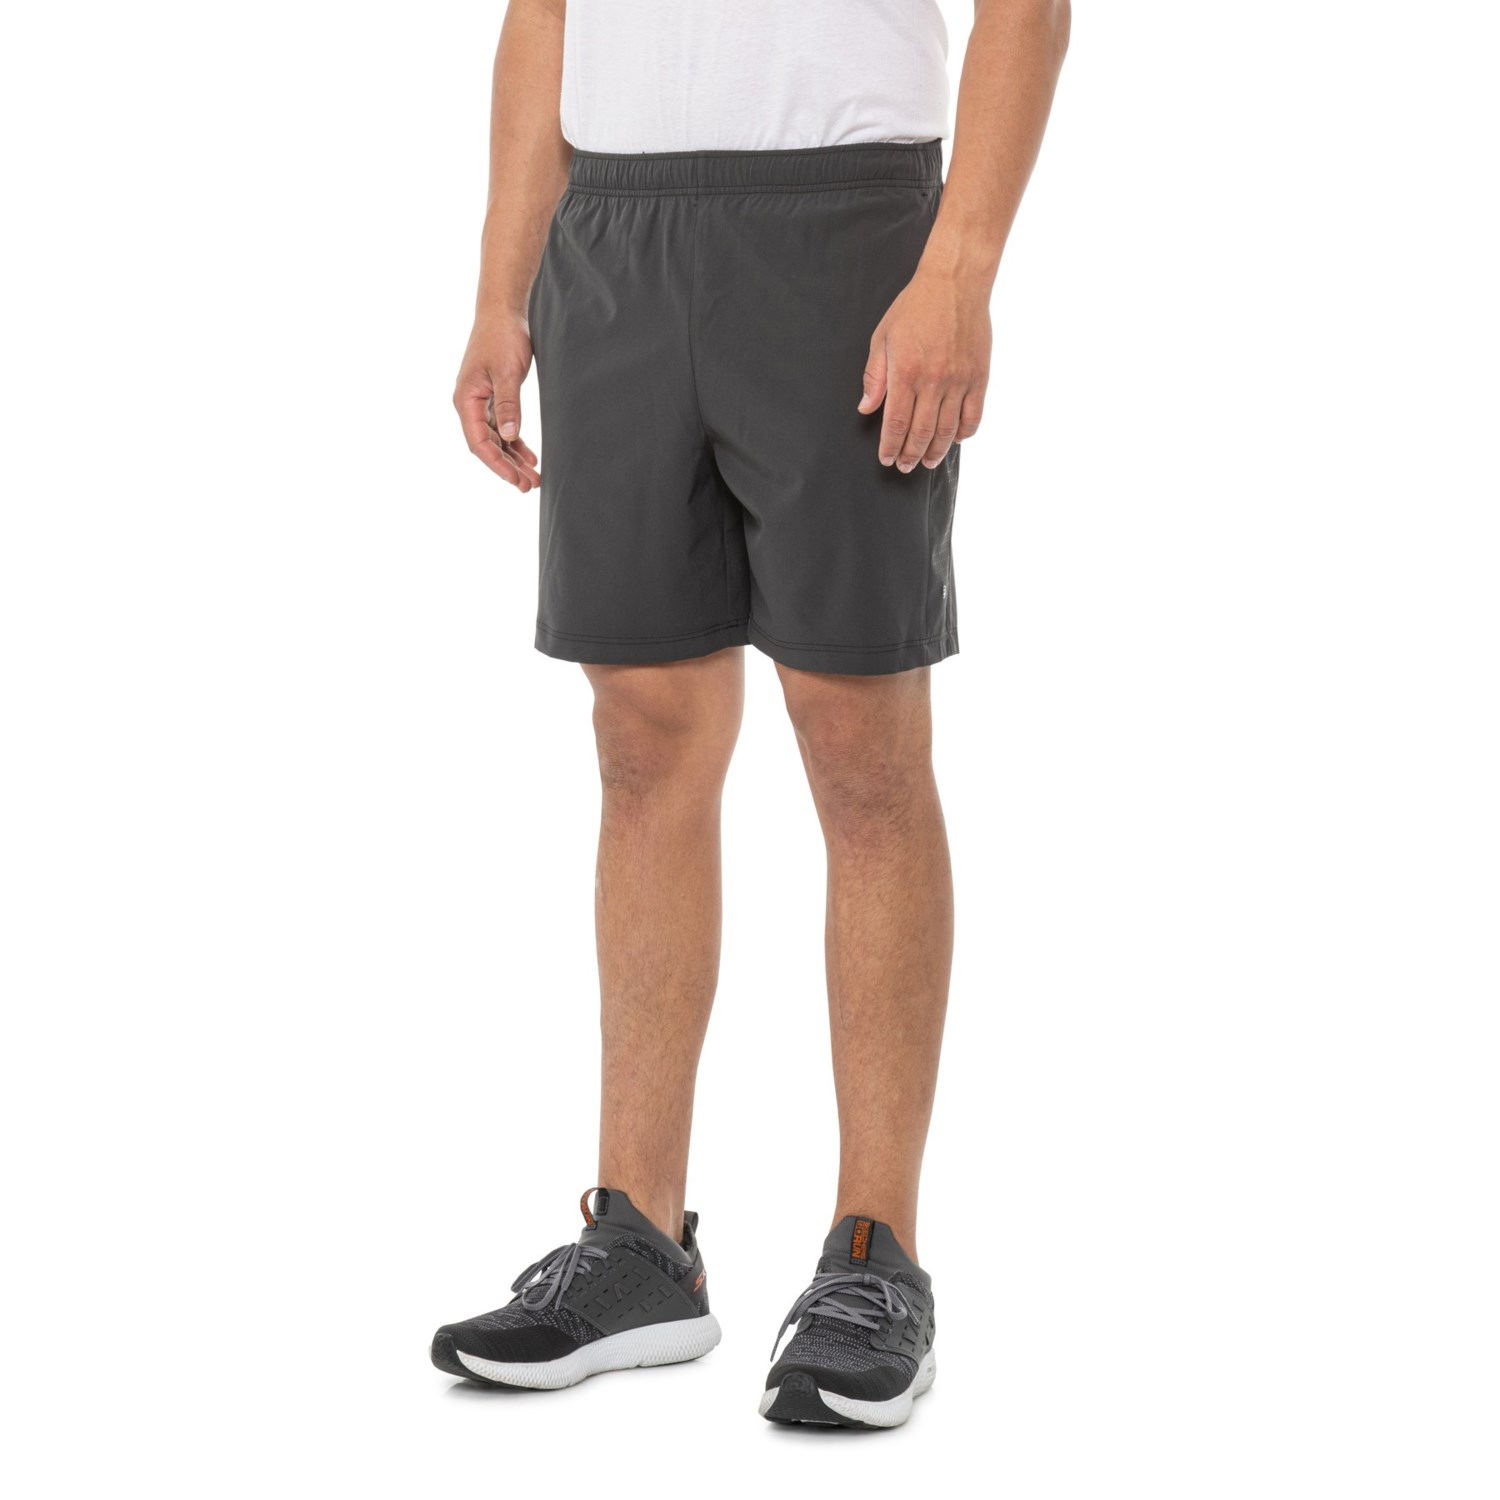 Etonic Woven Reflective Dot Print Shorts (For Men) - Save 27%